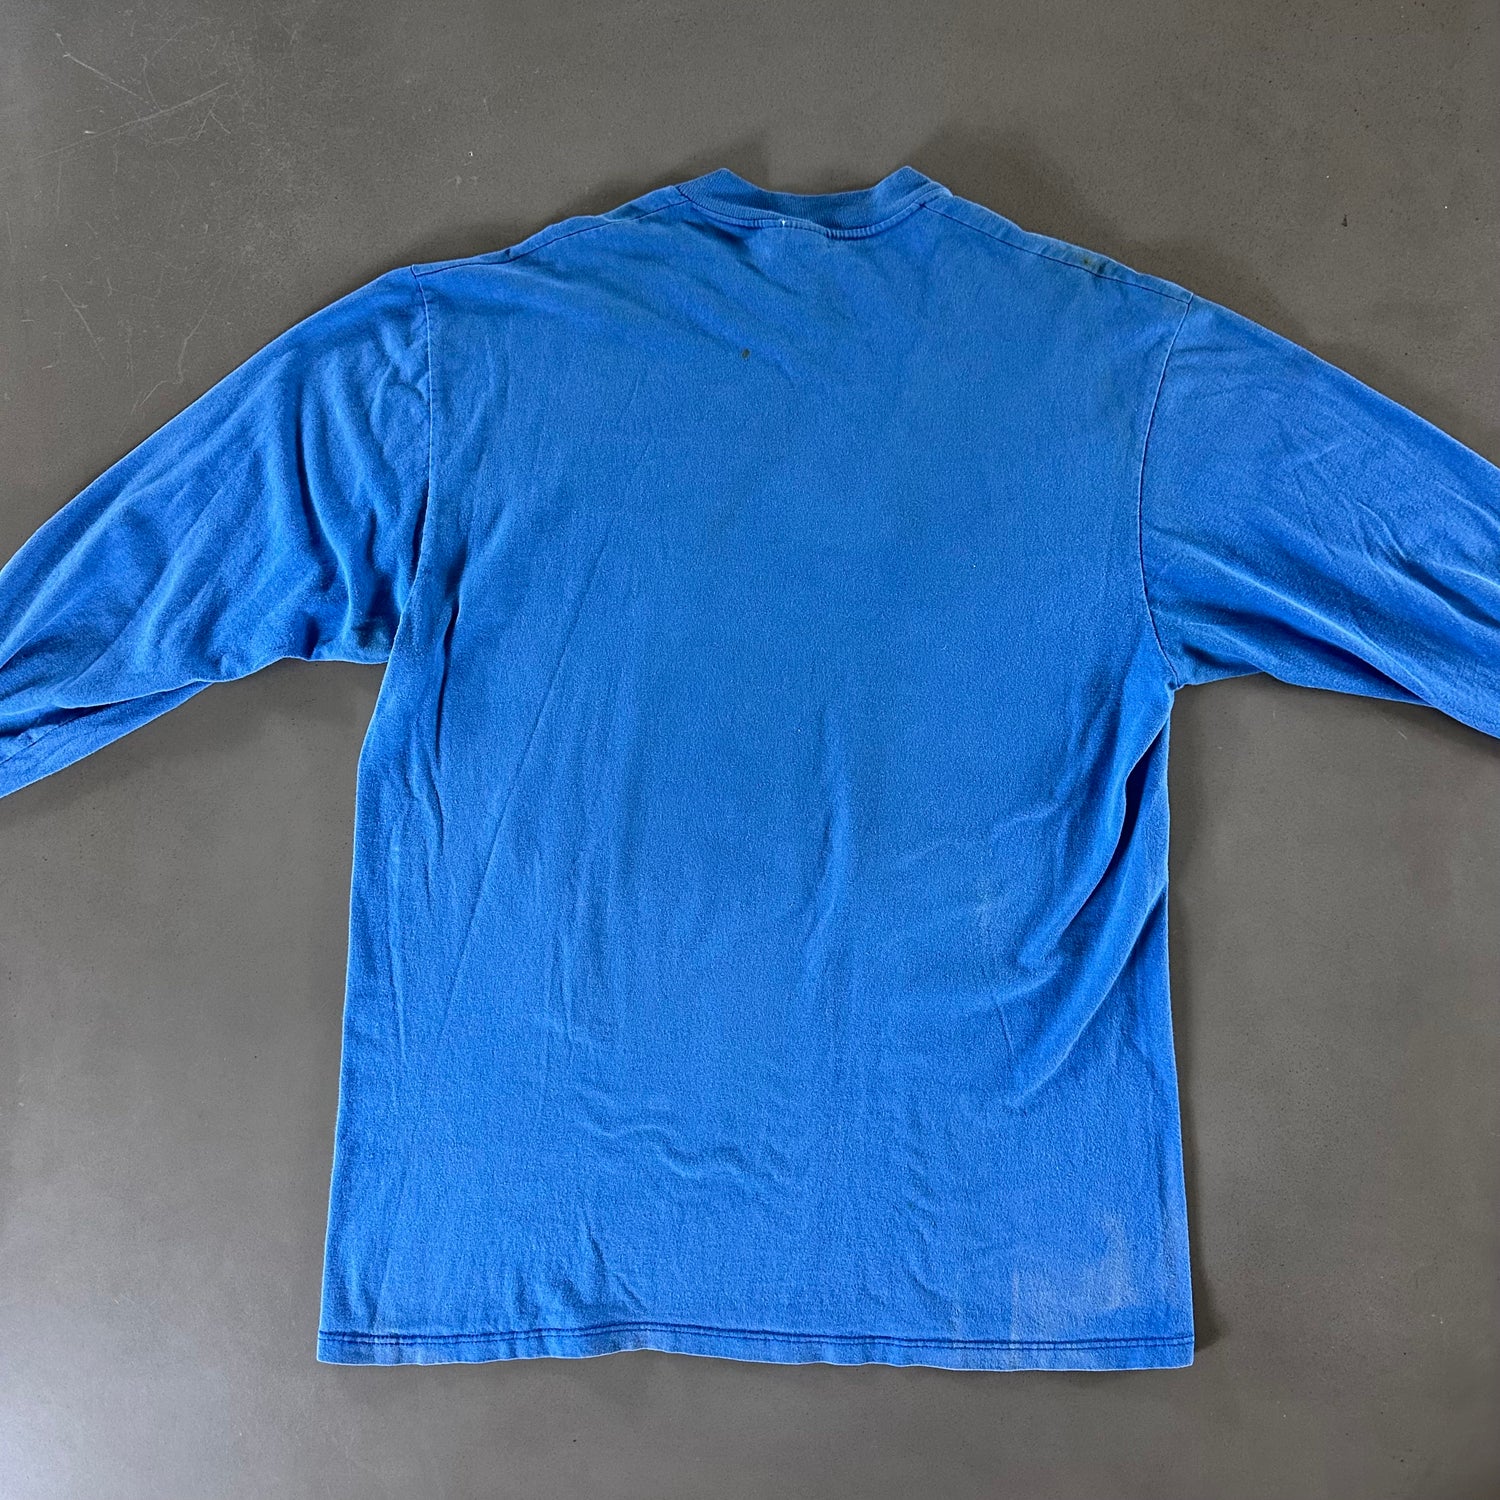 Vintage 1986 Tahoe Ski T-shirt size XL